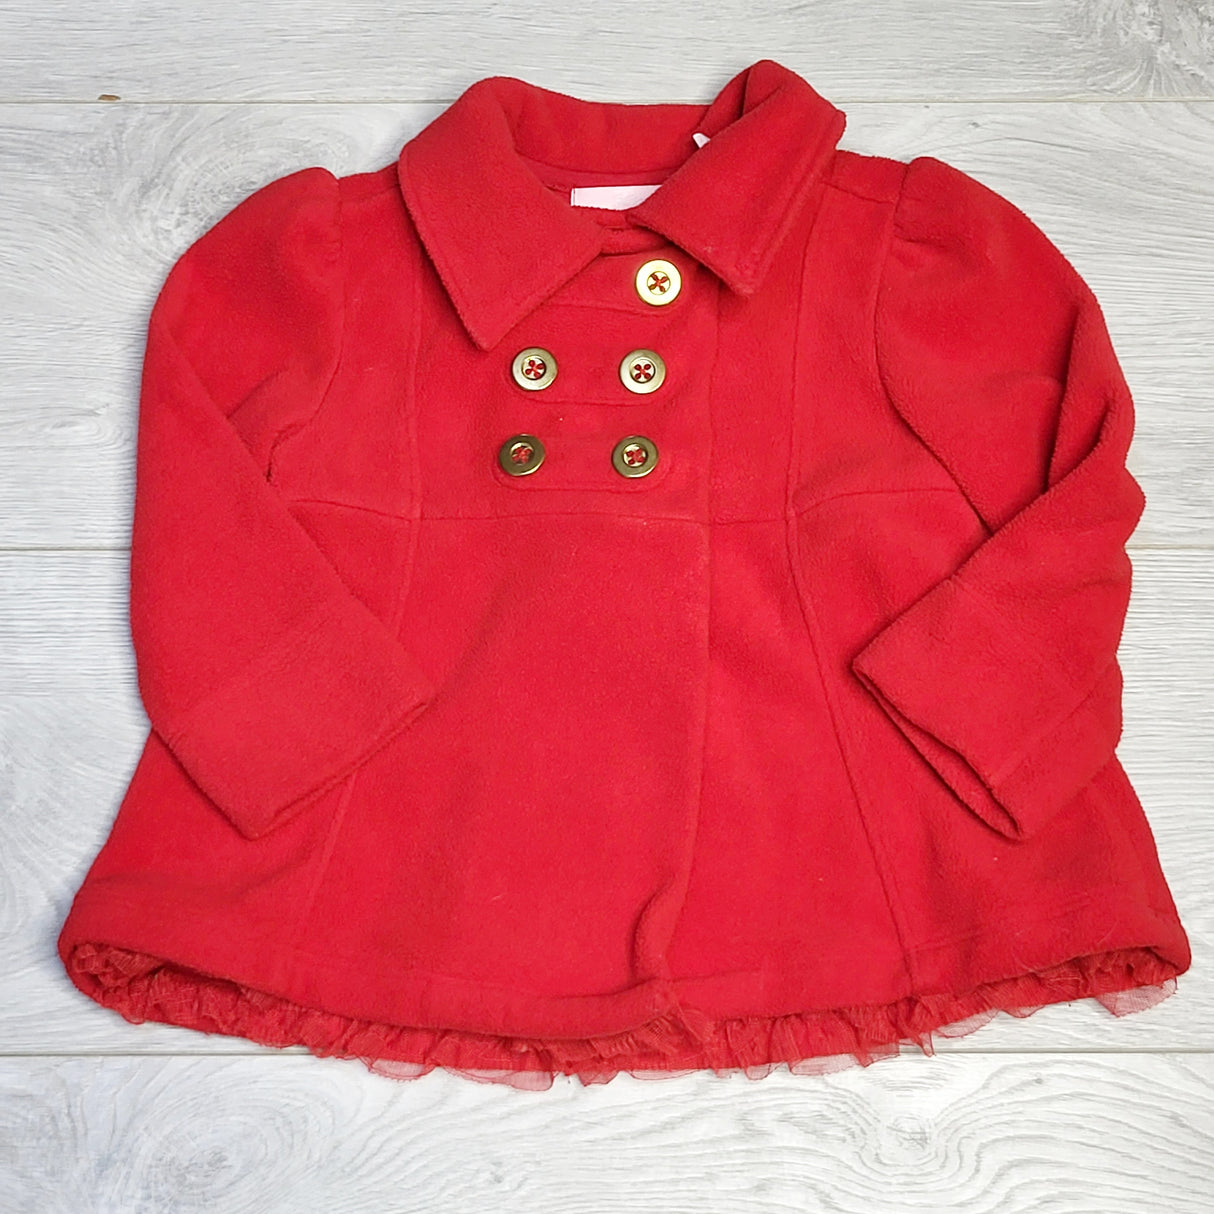 RAJ2 - Kids Headquarters red fleece jacket, size 18 months